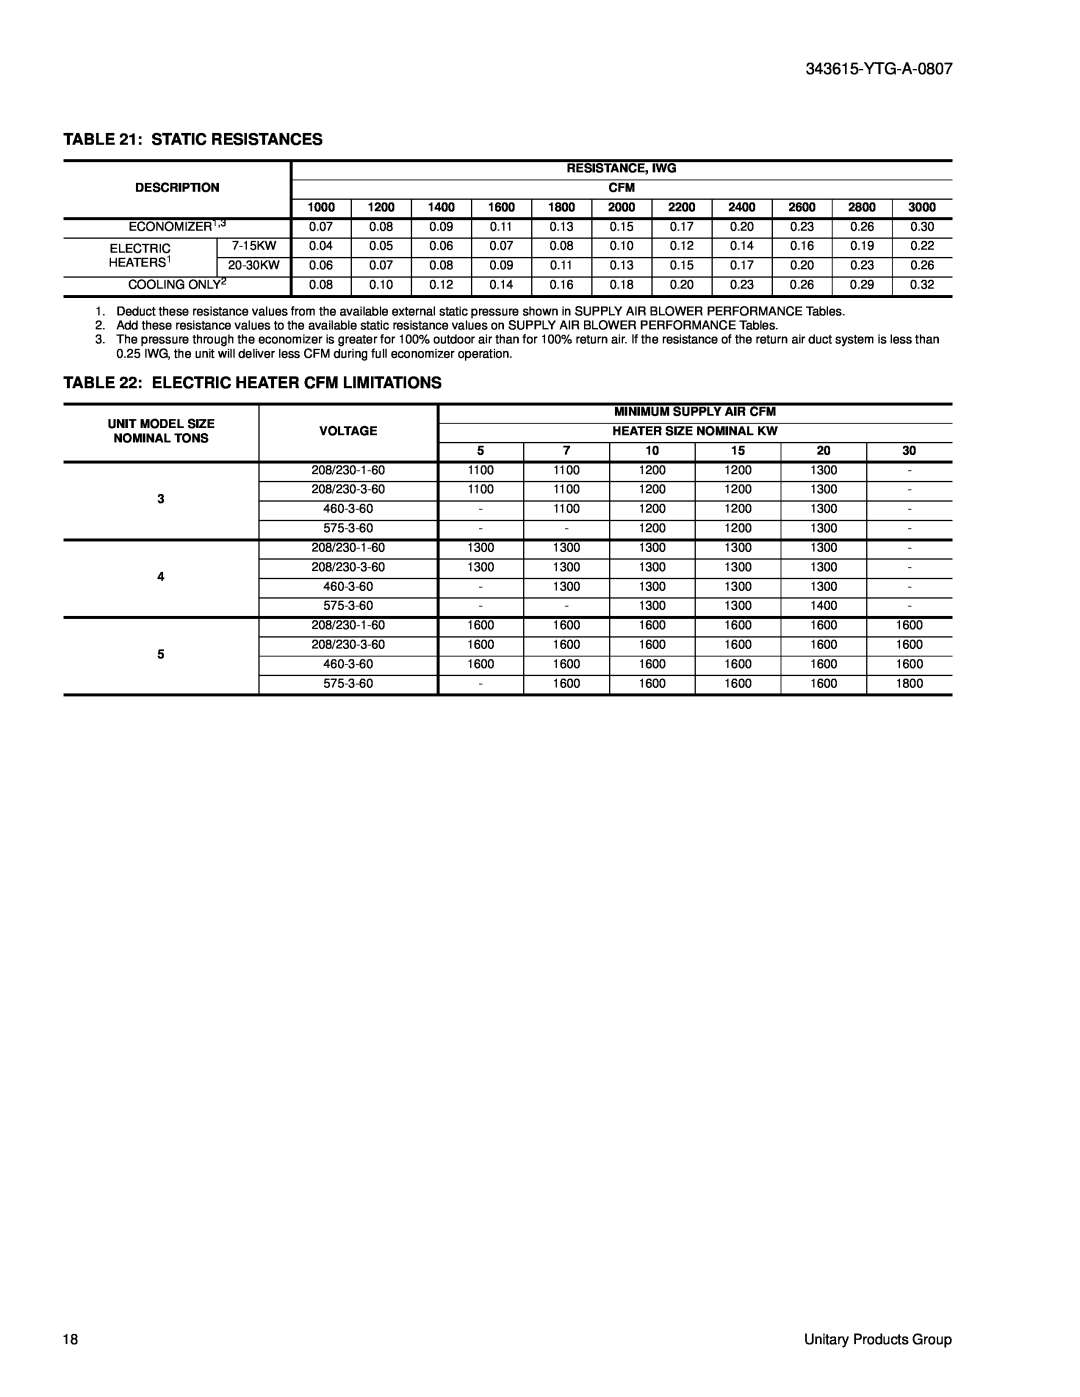 York DY 036 warranty Static Resistances, Electric Heater Cfm Limitations 